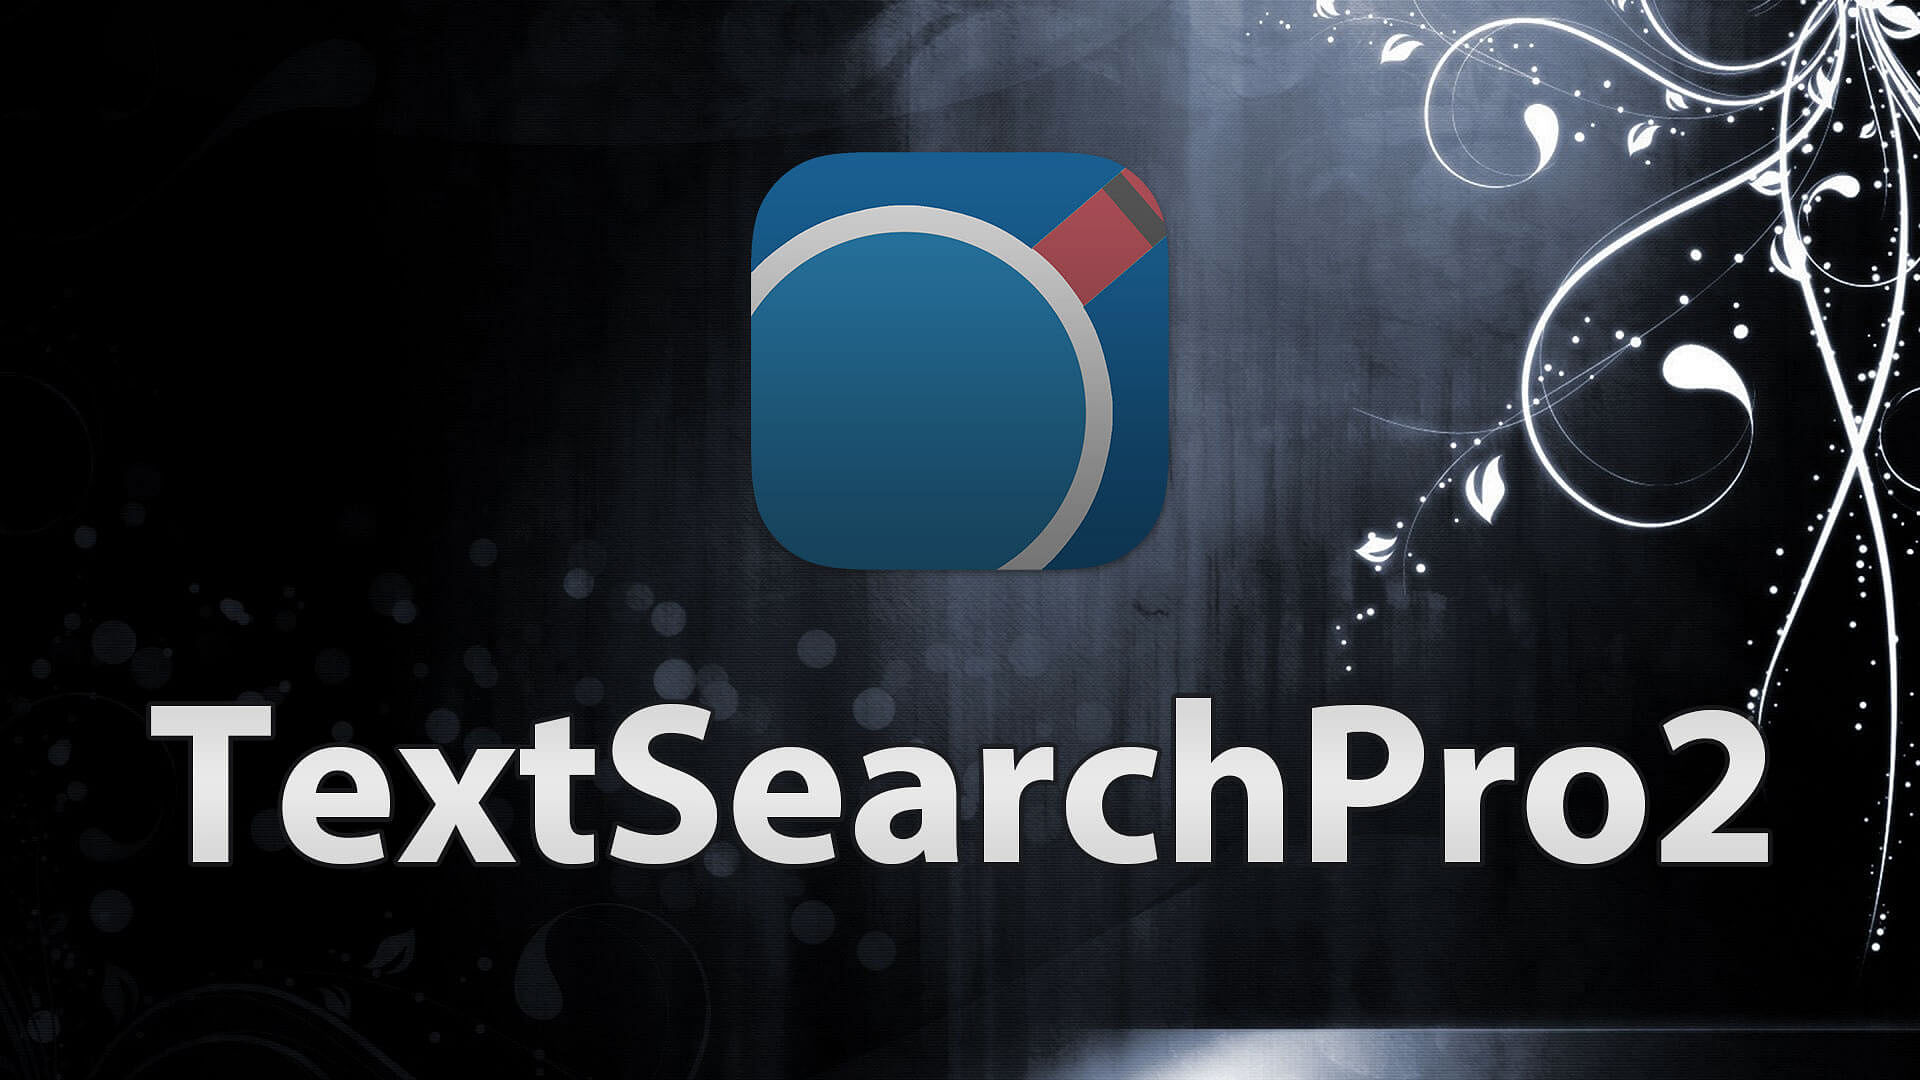 TextSearchPro2